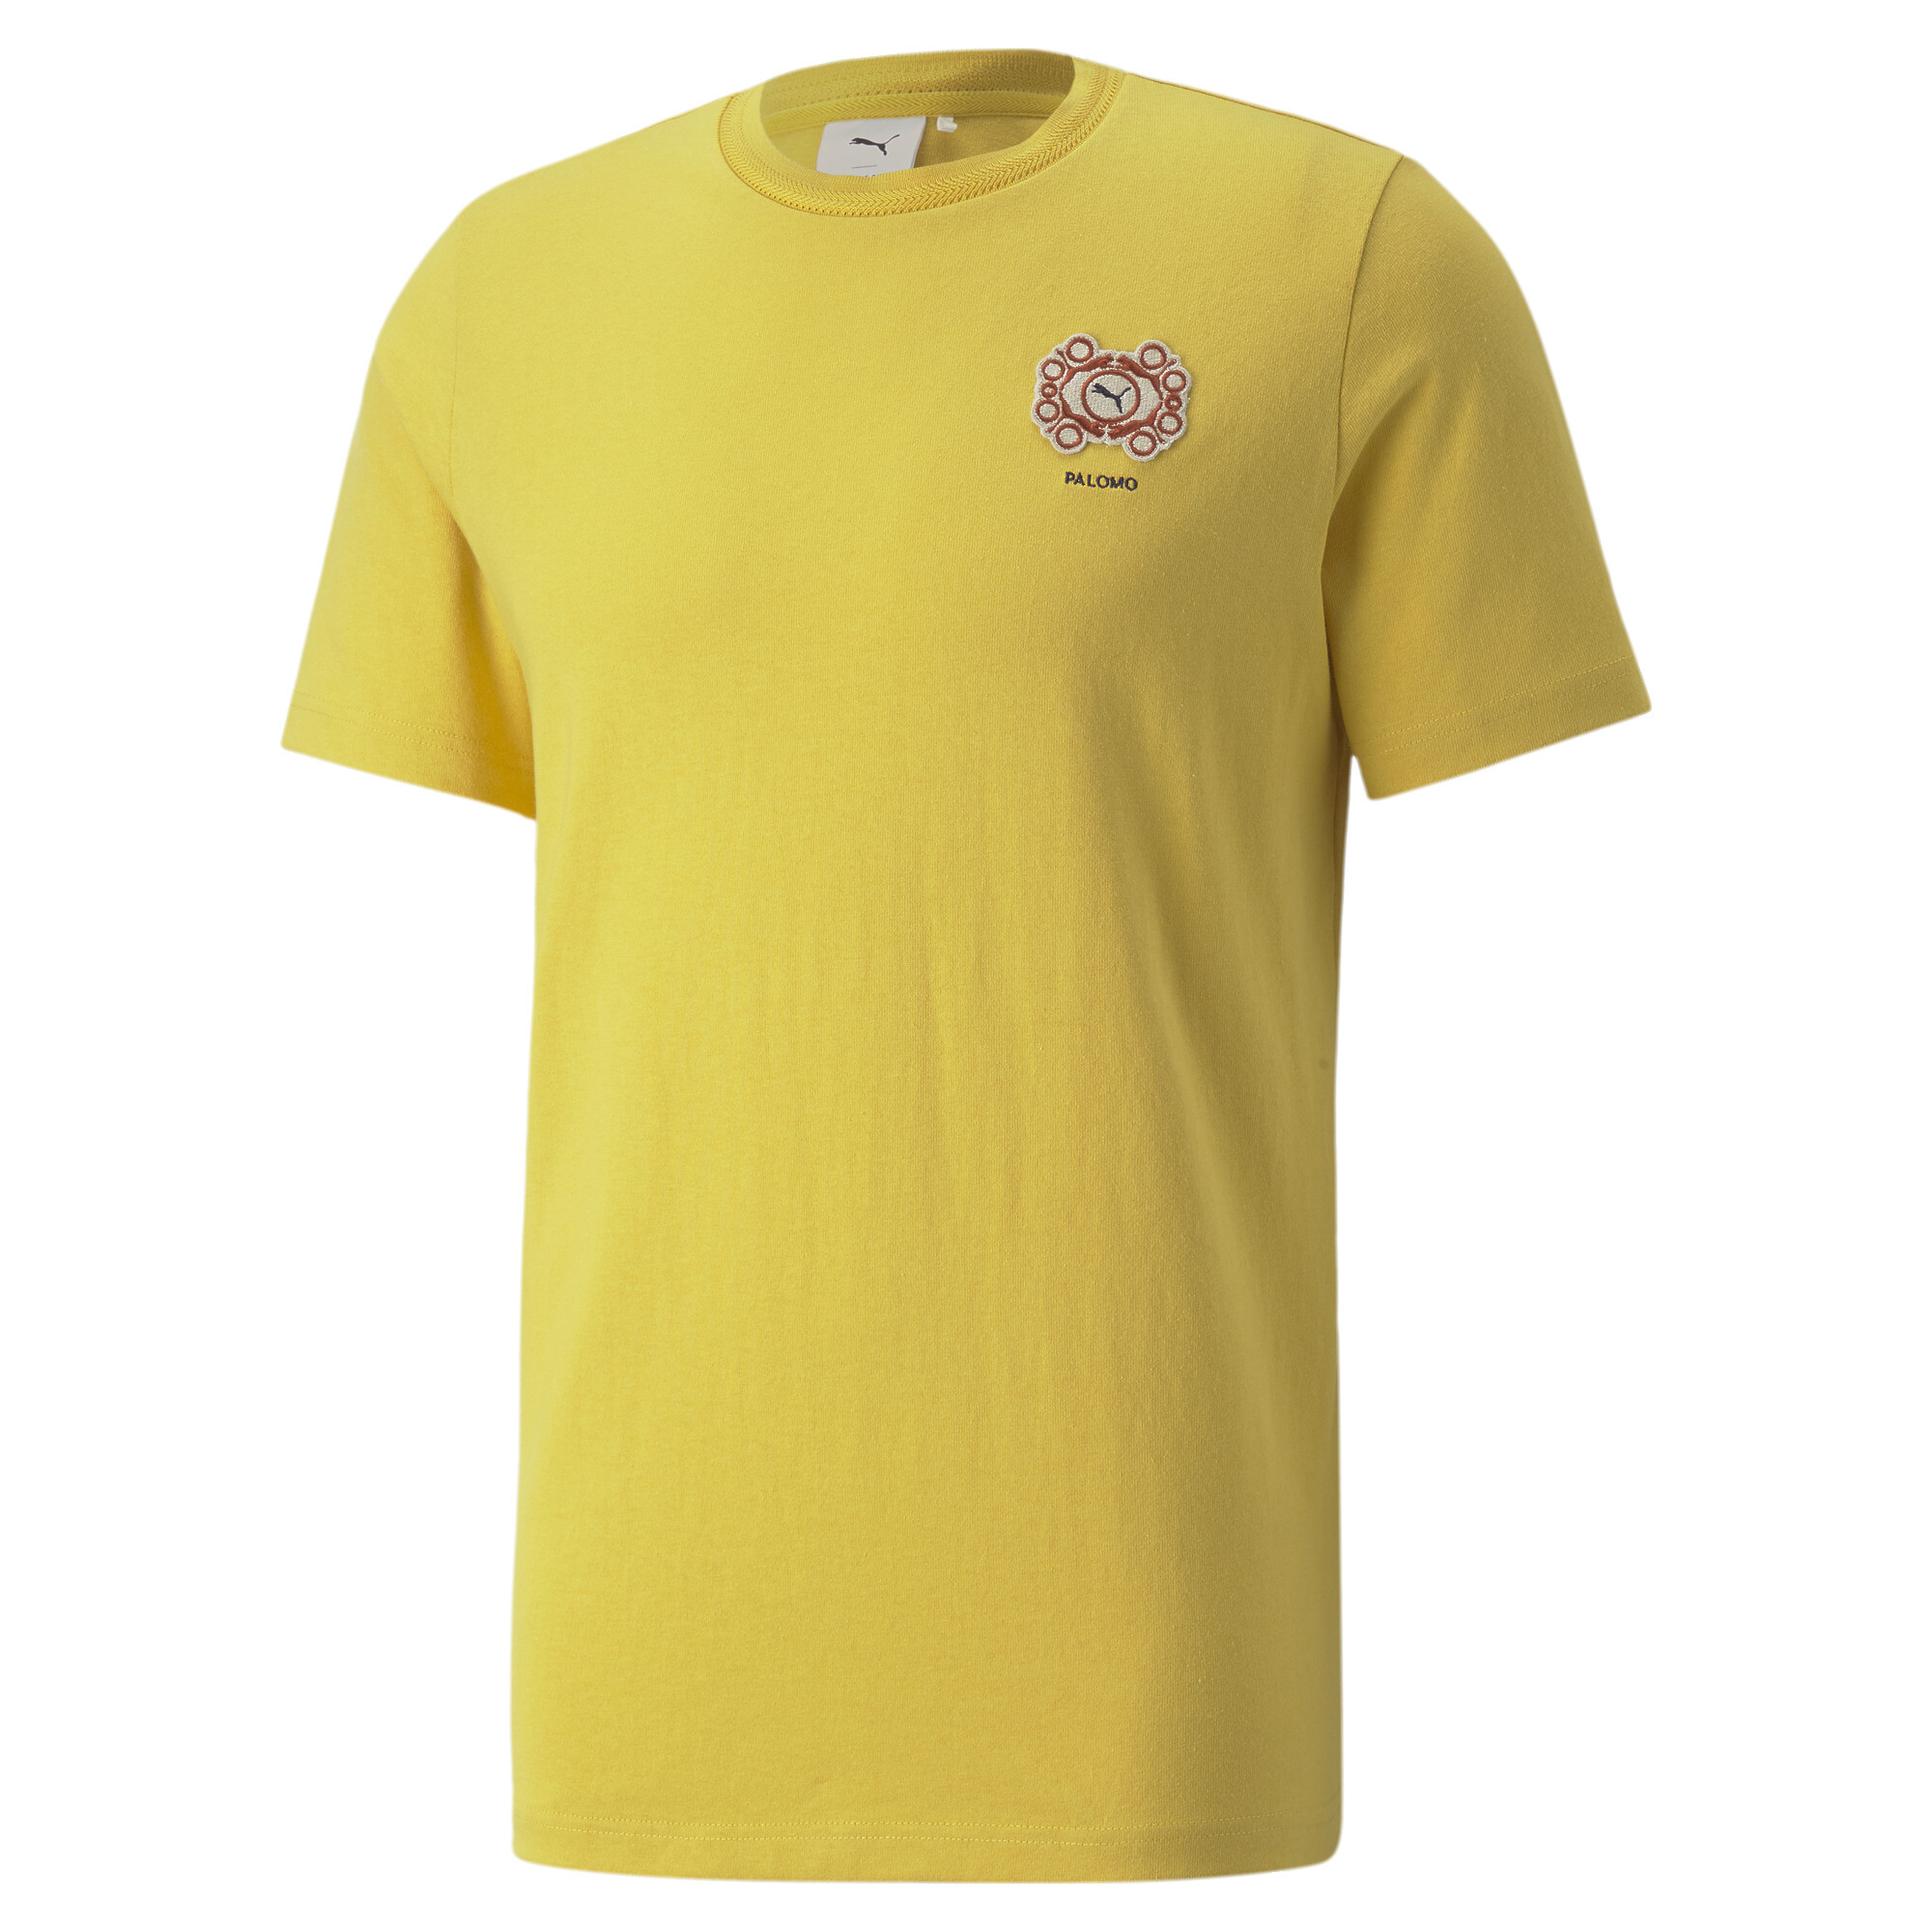 54%OFF！＜プーマ公式通販＞ プーマ ユニセックス PUMA x Palomo Spain Tシャツ ユニセックス Super Lemon ｜PUMA.com